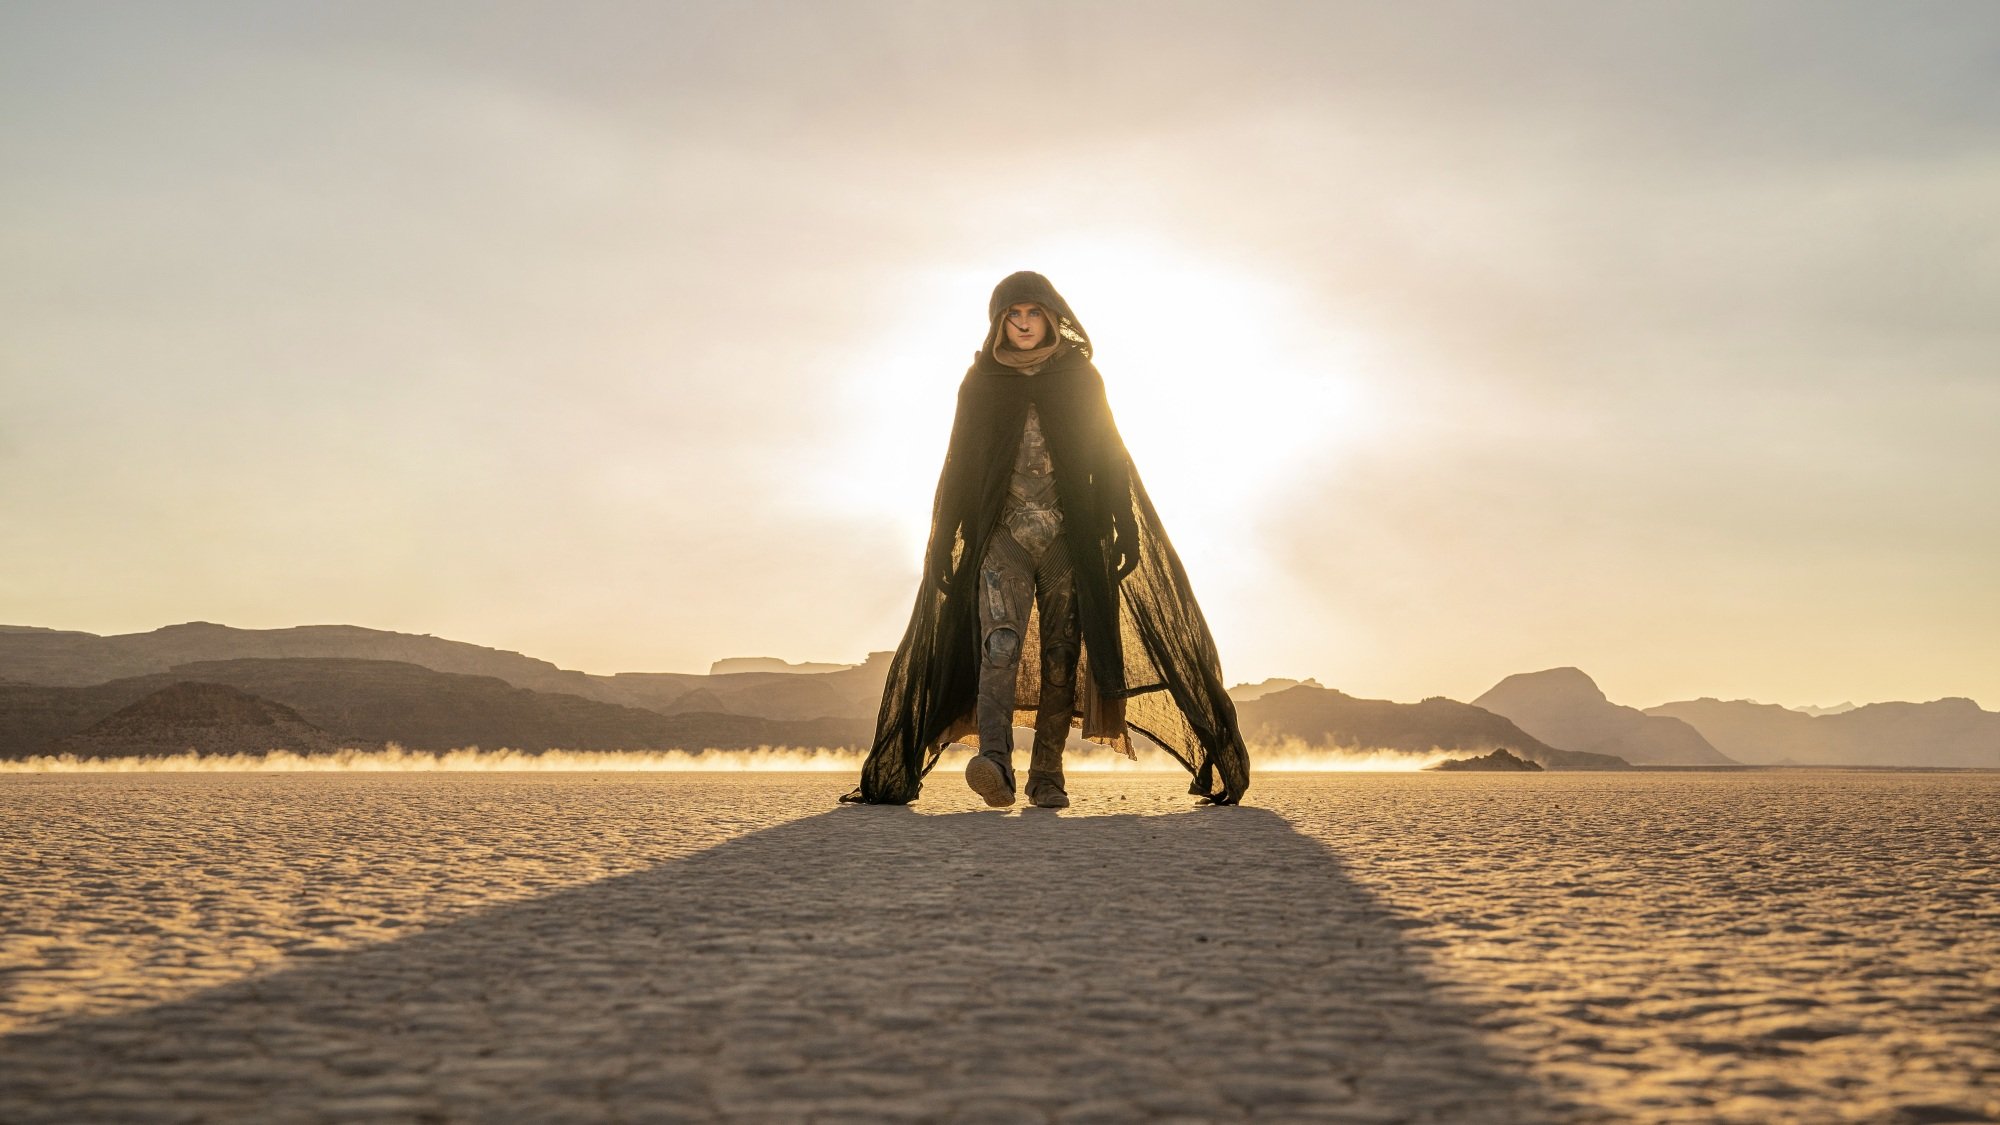 Paul Atreides walking through the desert in a cloak and stillsuit.